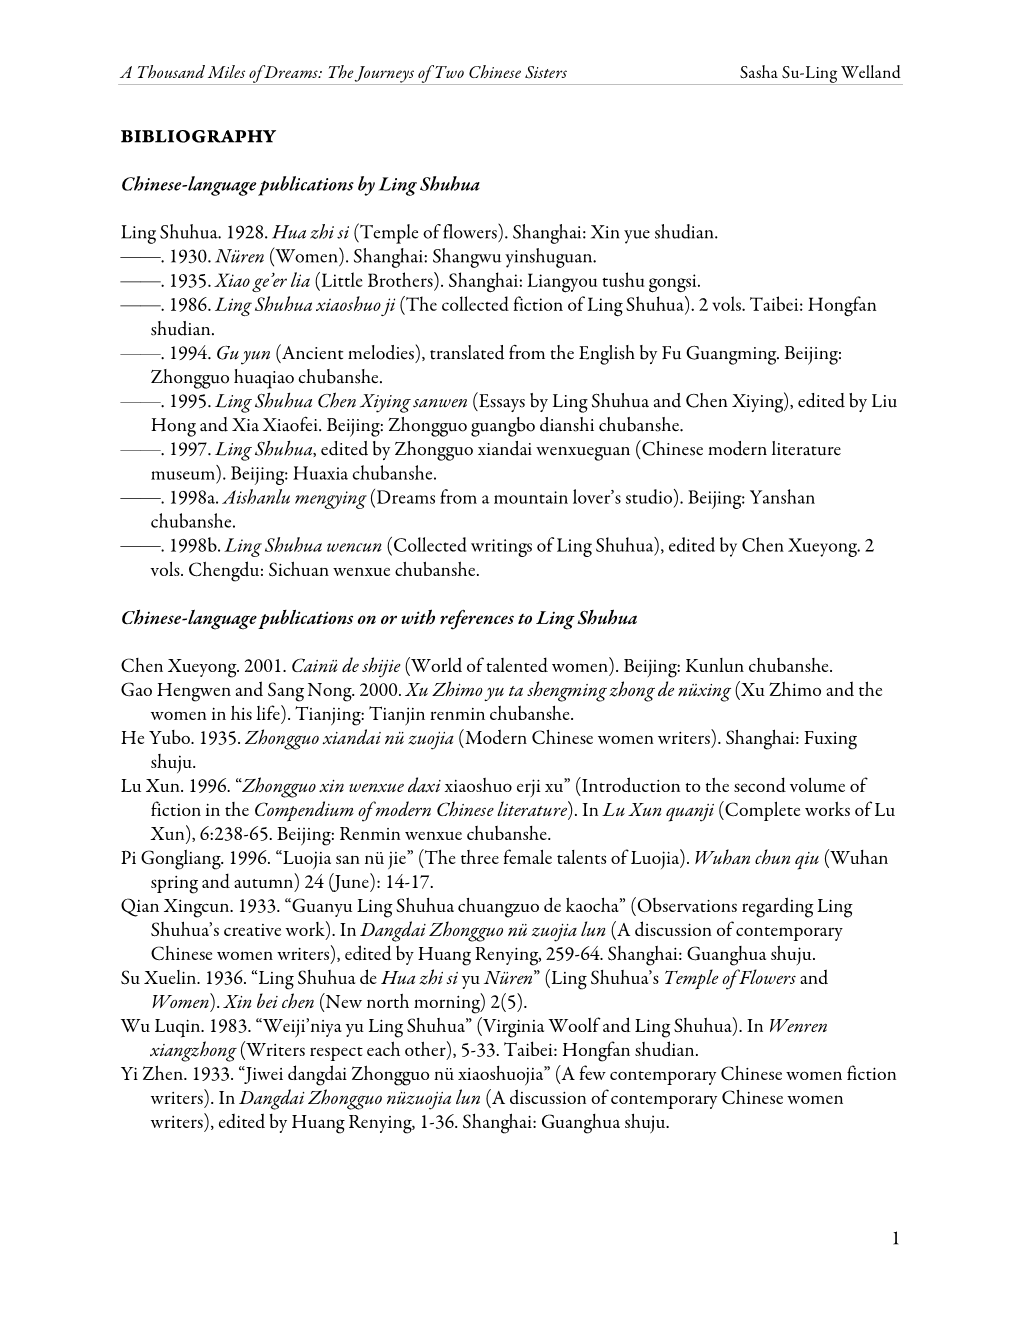 1 BIBLIOGRAPHY Chinese-Language Publications by Ling Shuhua Ling